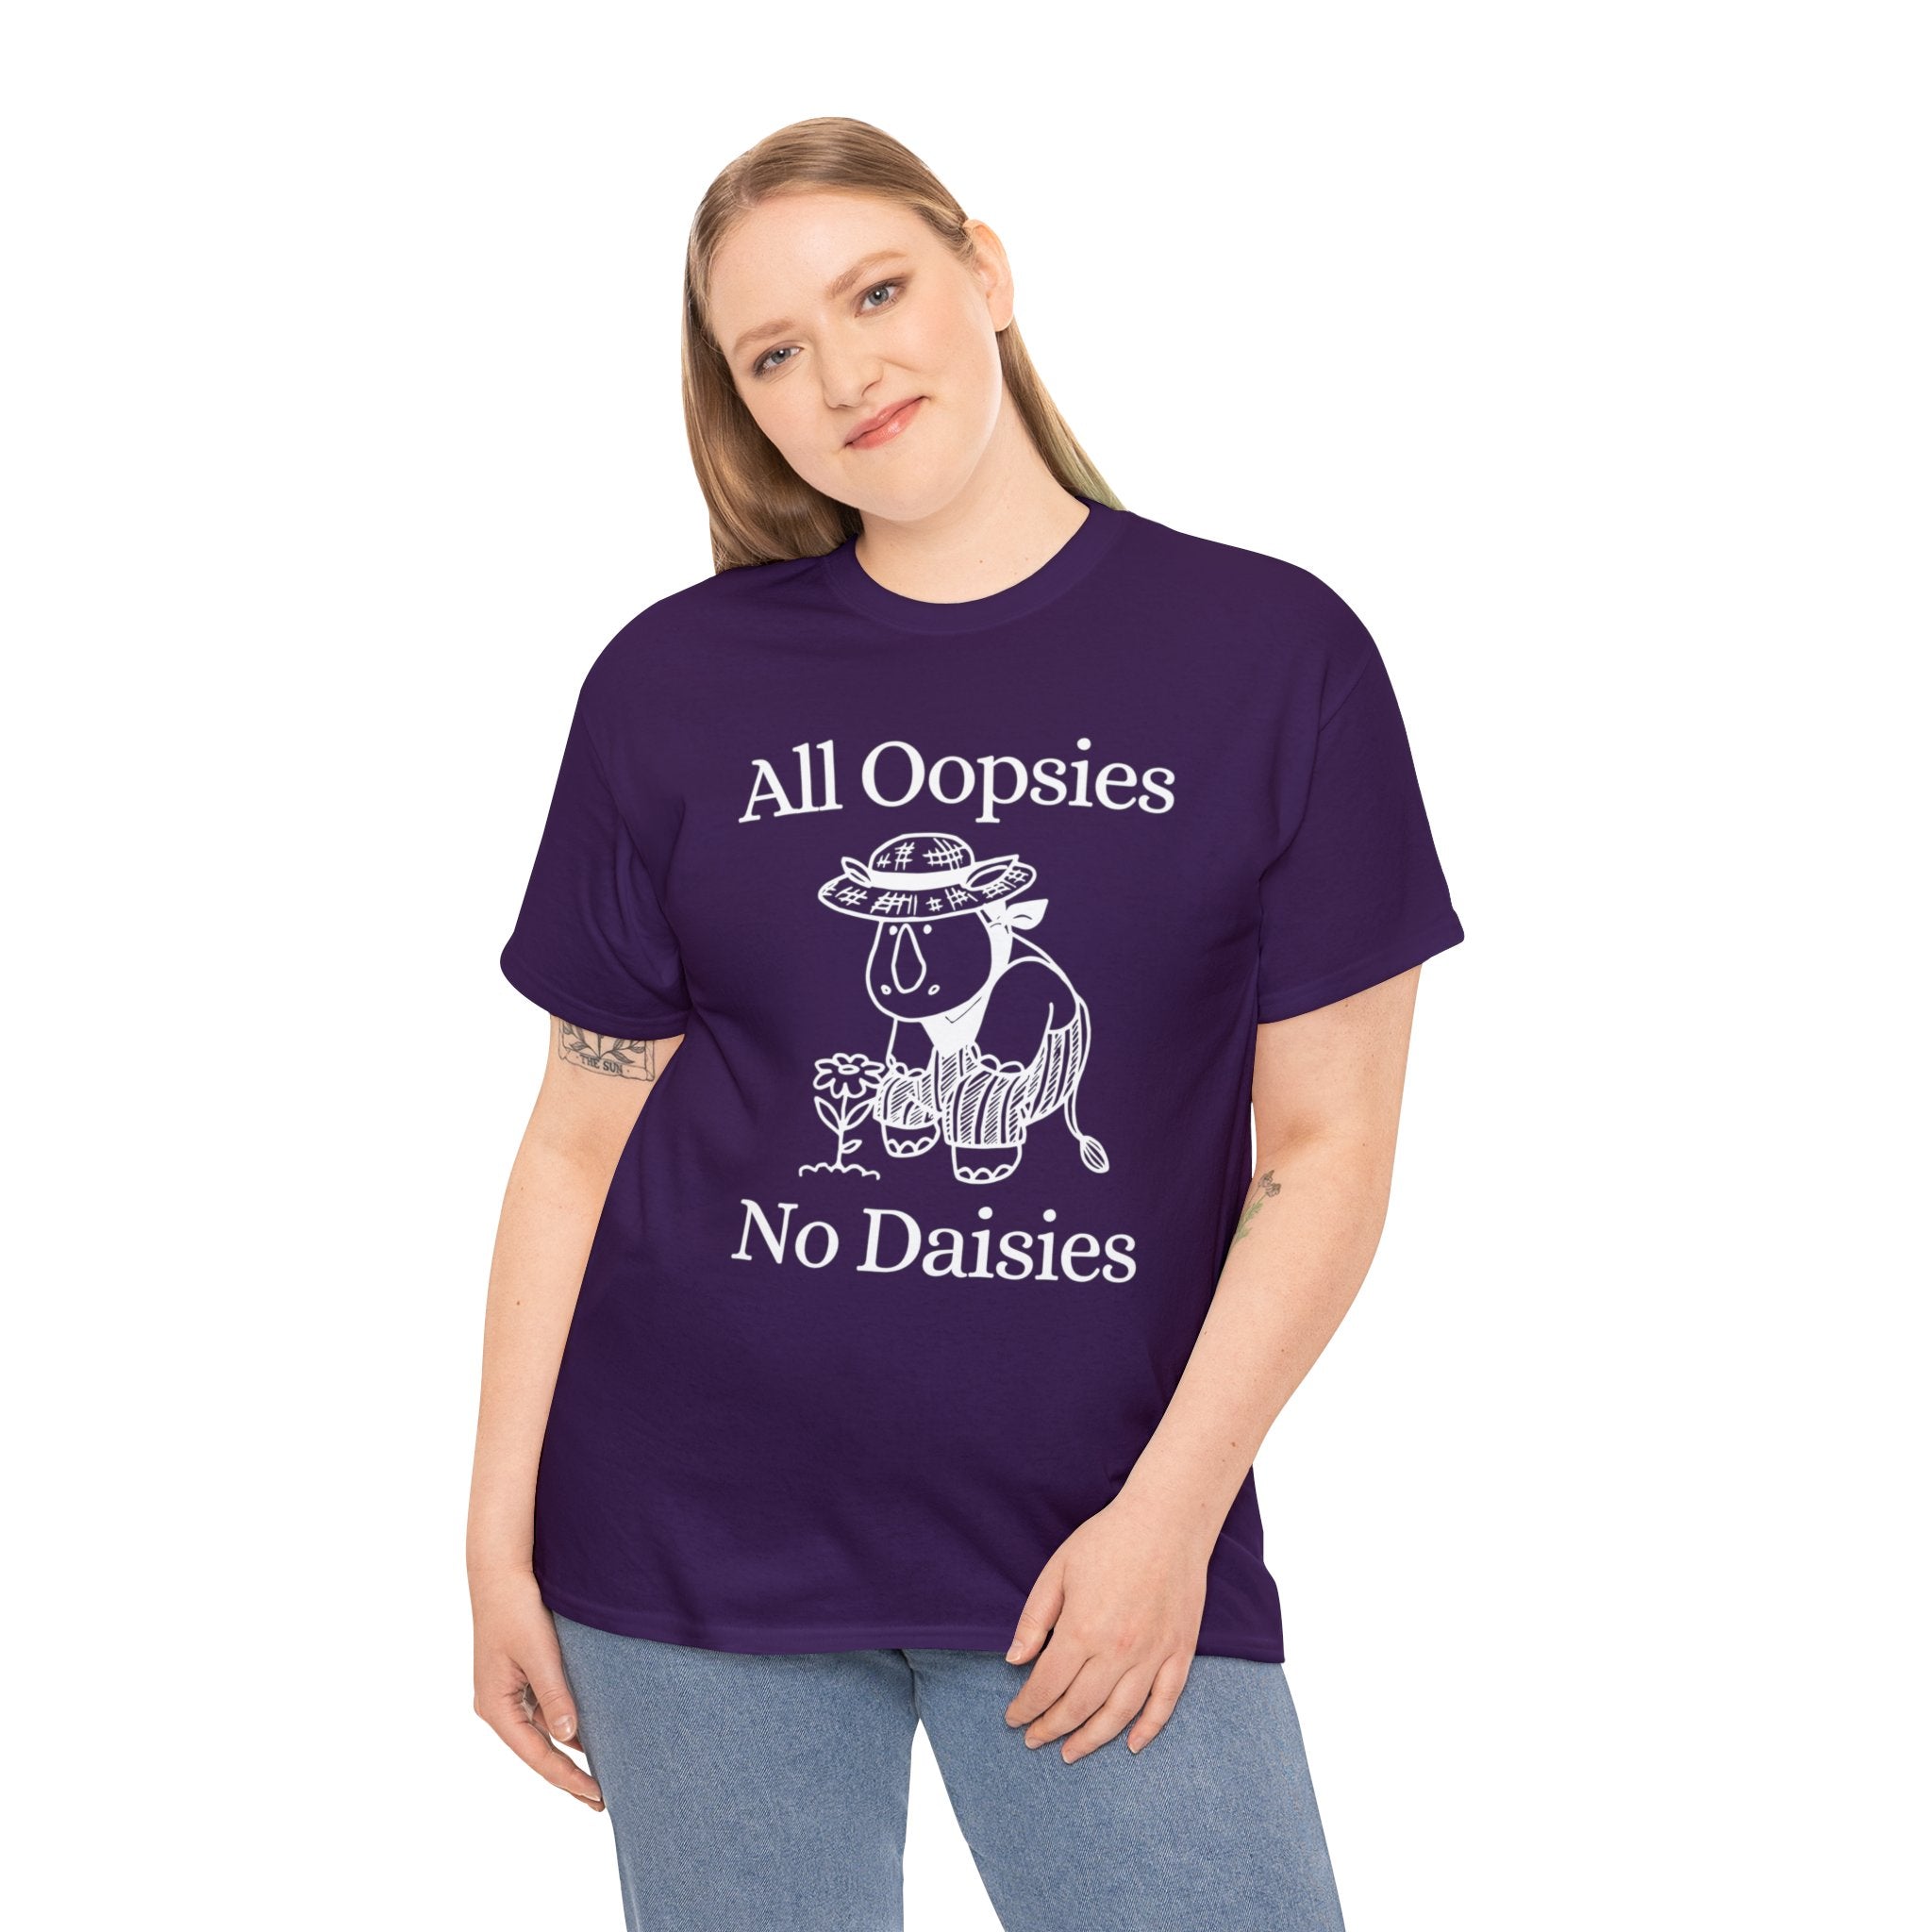 All oopsies no daisies | graphic tee | funny shirt | vintage shirt | sarcastic t-shirt retro cartoon tee